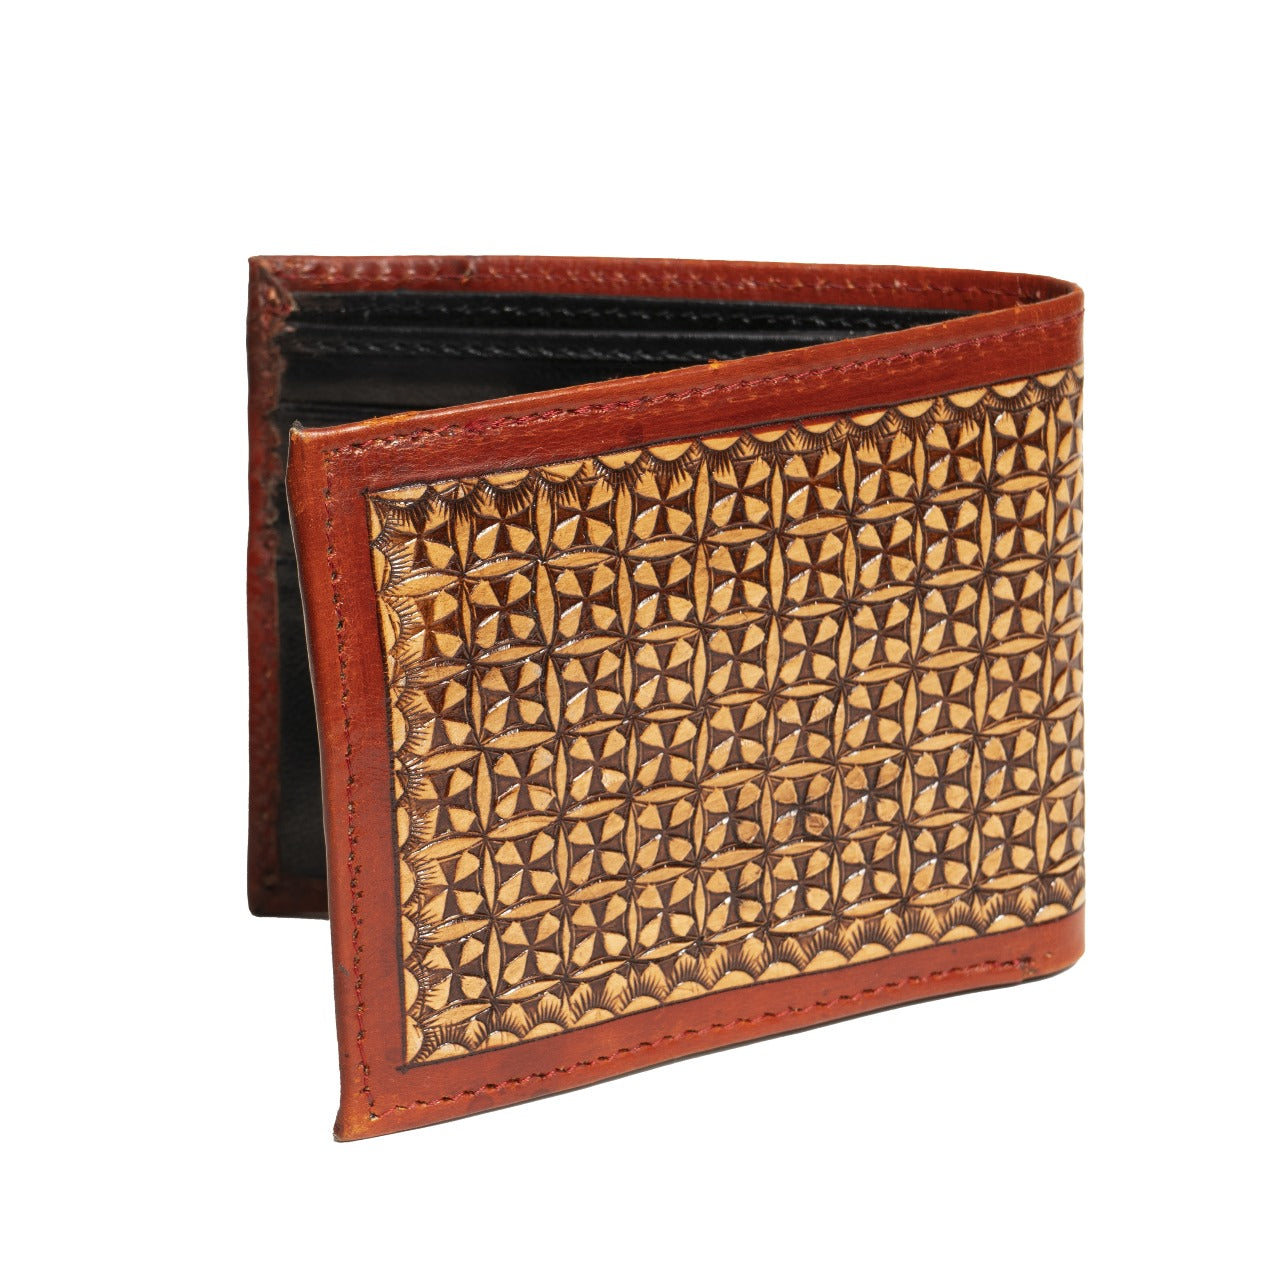 Stylish Embellished Genuine Leather Men's Wallet